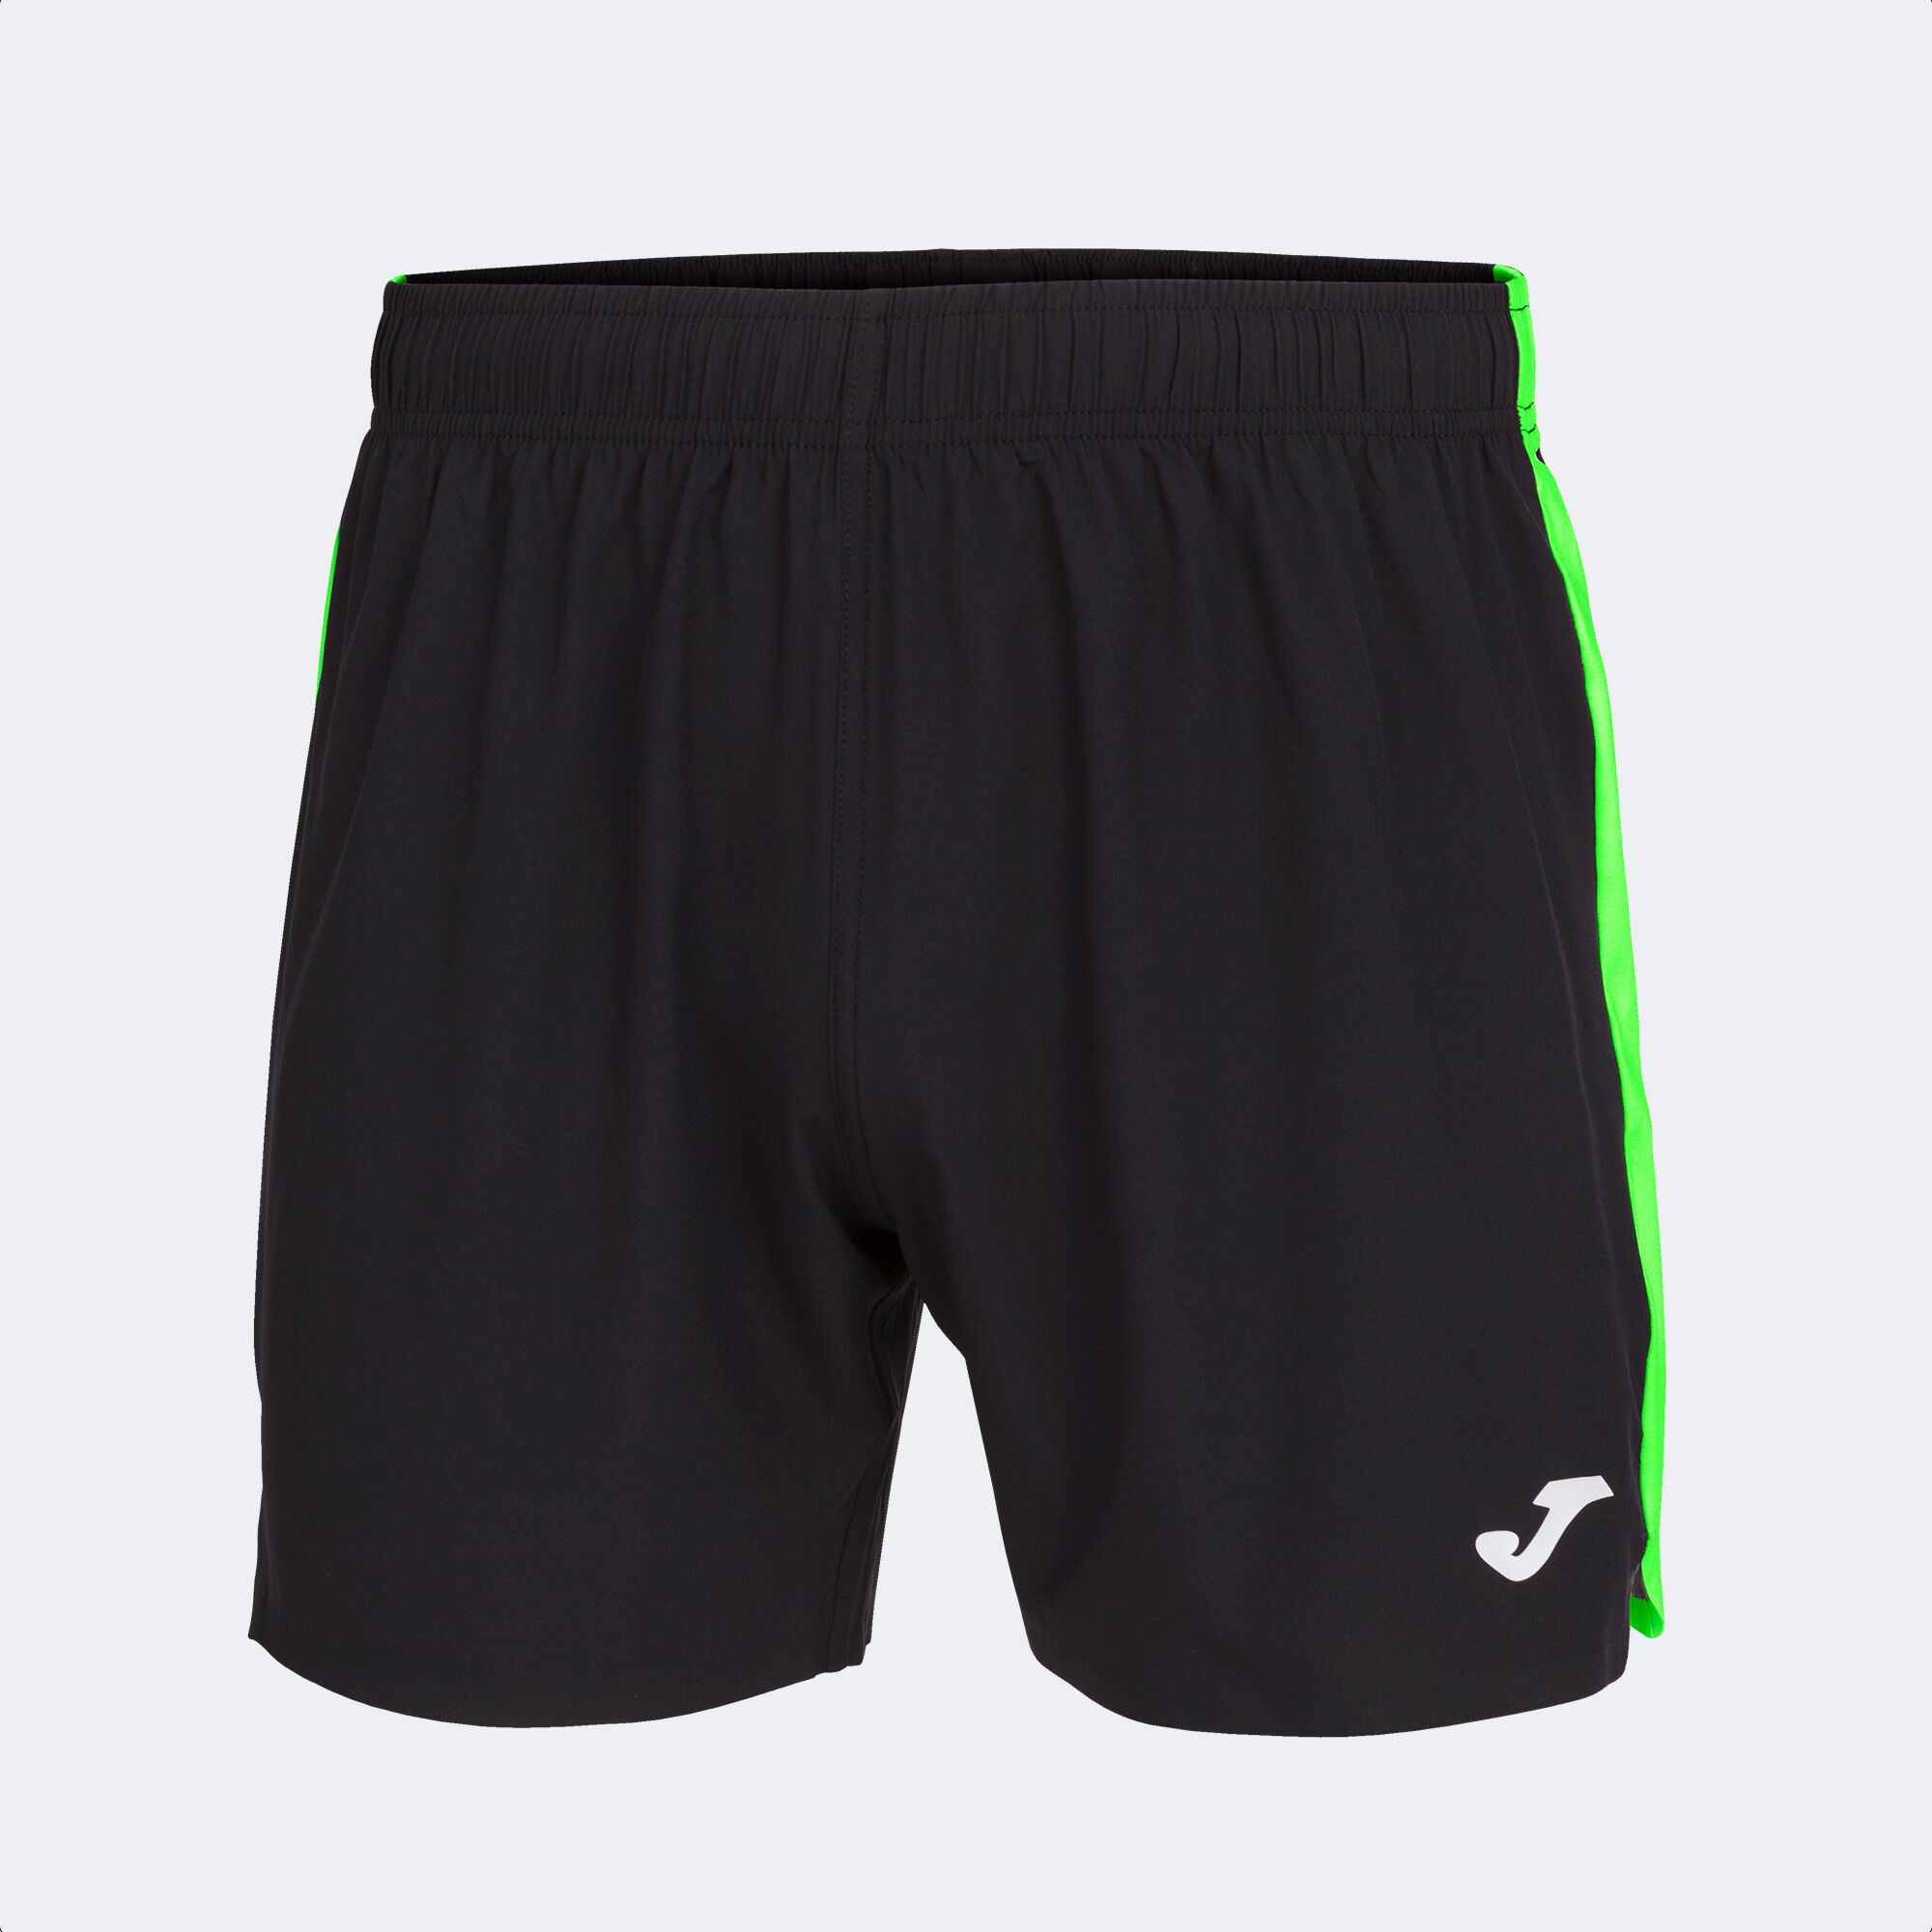 Shorts man Elite VII black fluorescent green